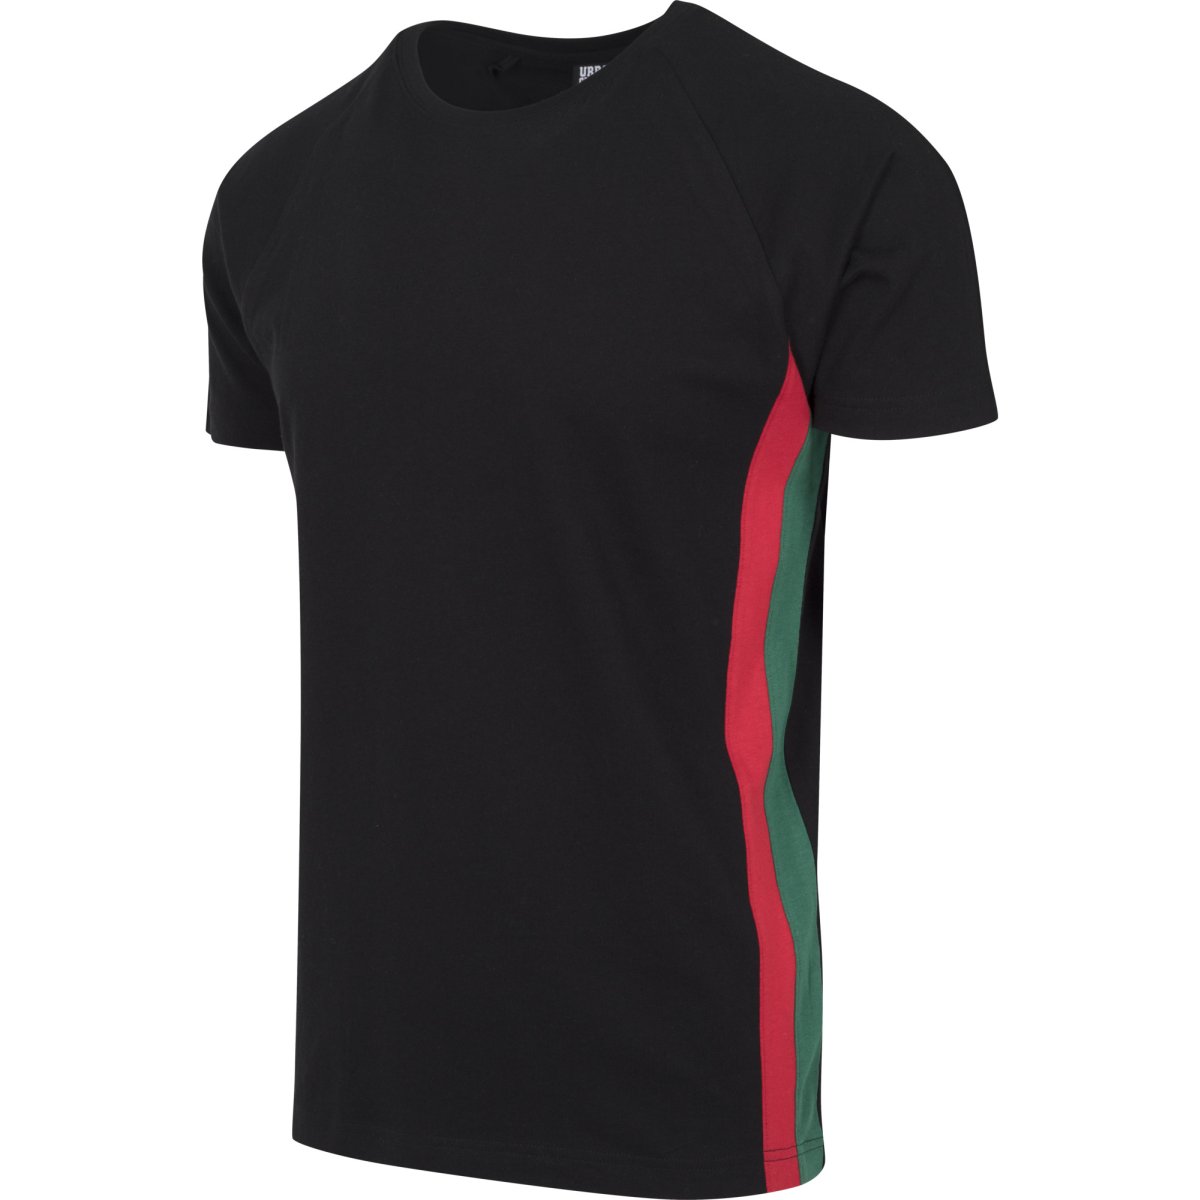 Buy Urban Classics - Raglan Stripe Shirt black / red / green